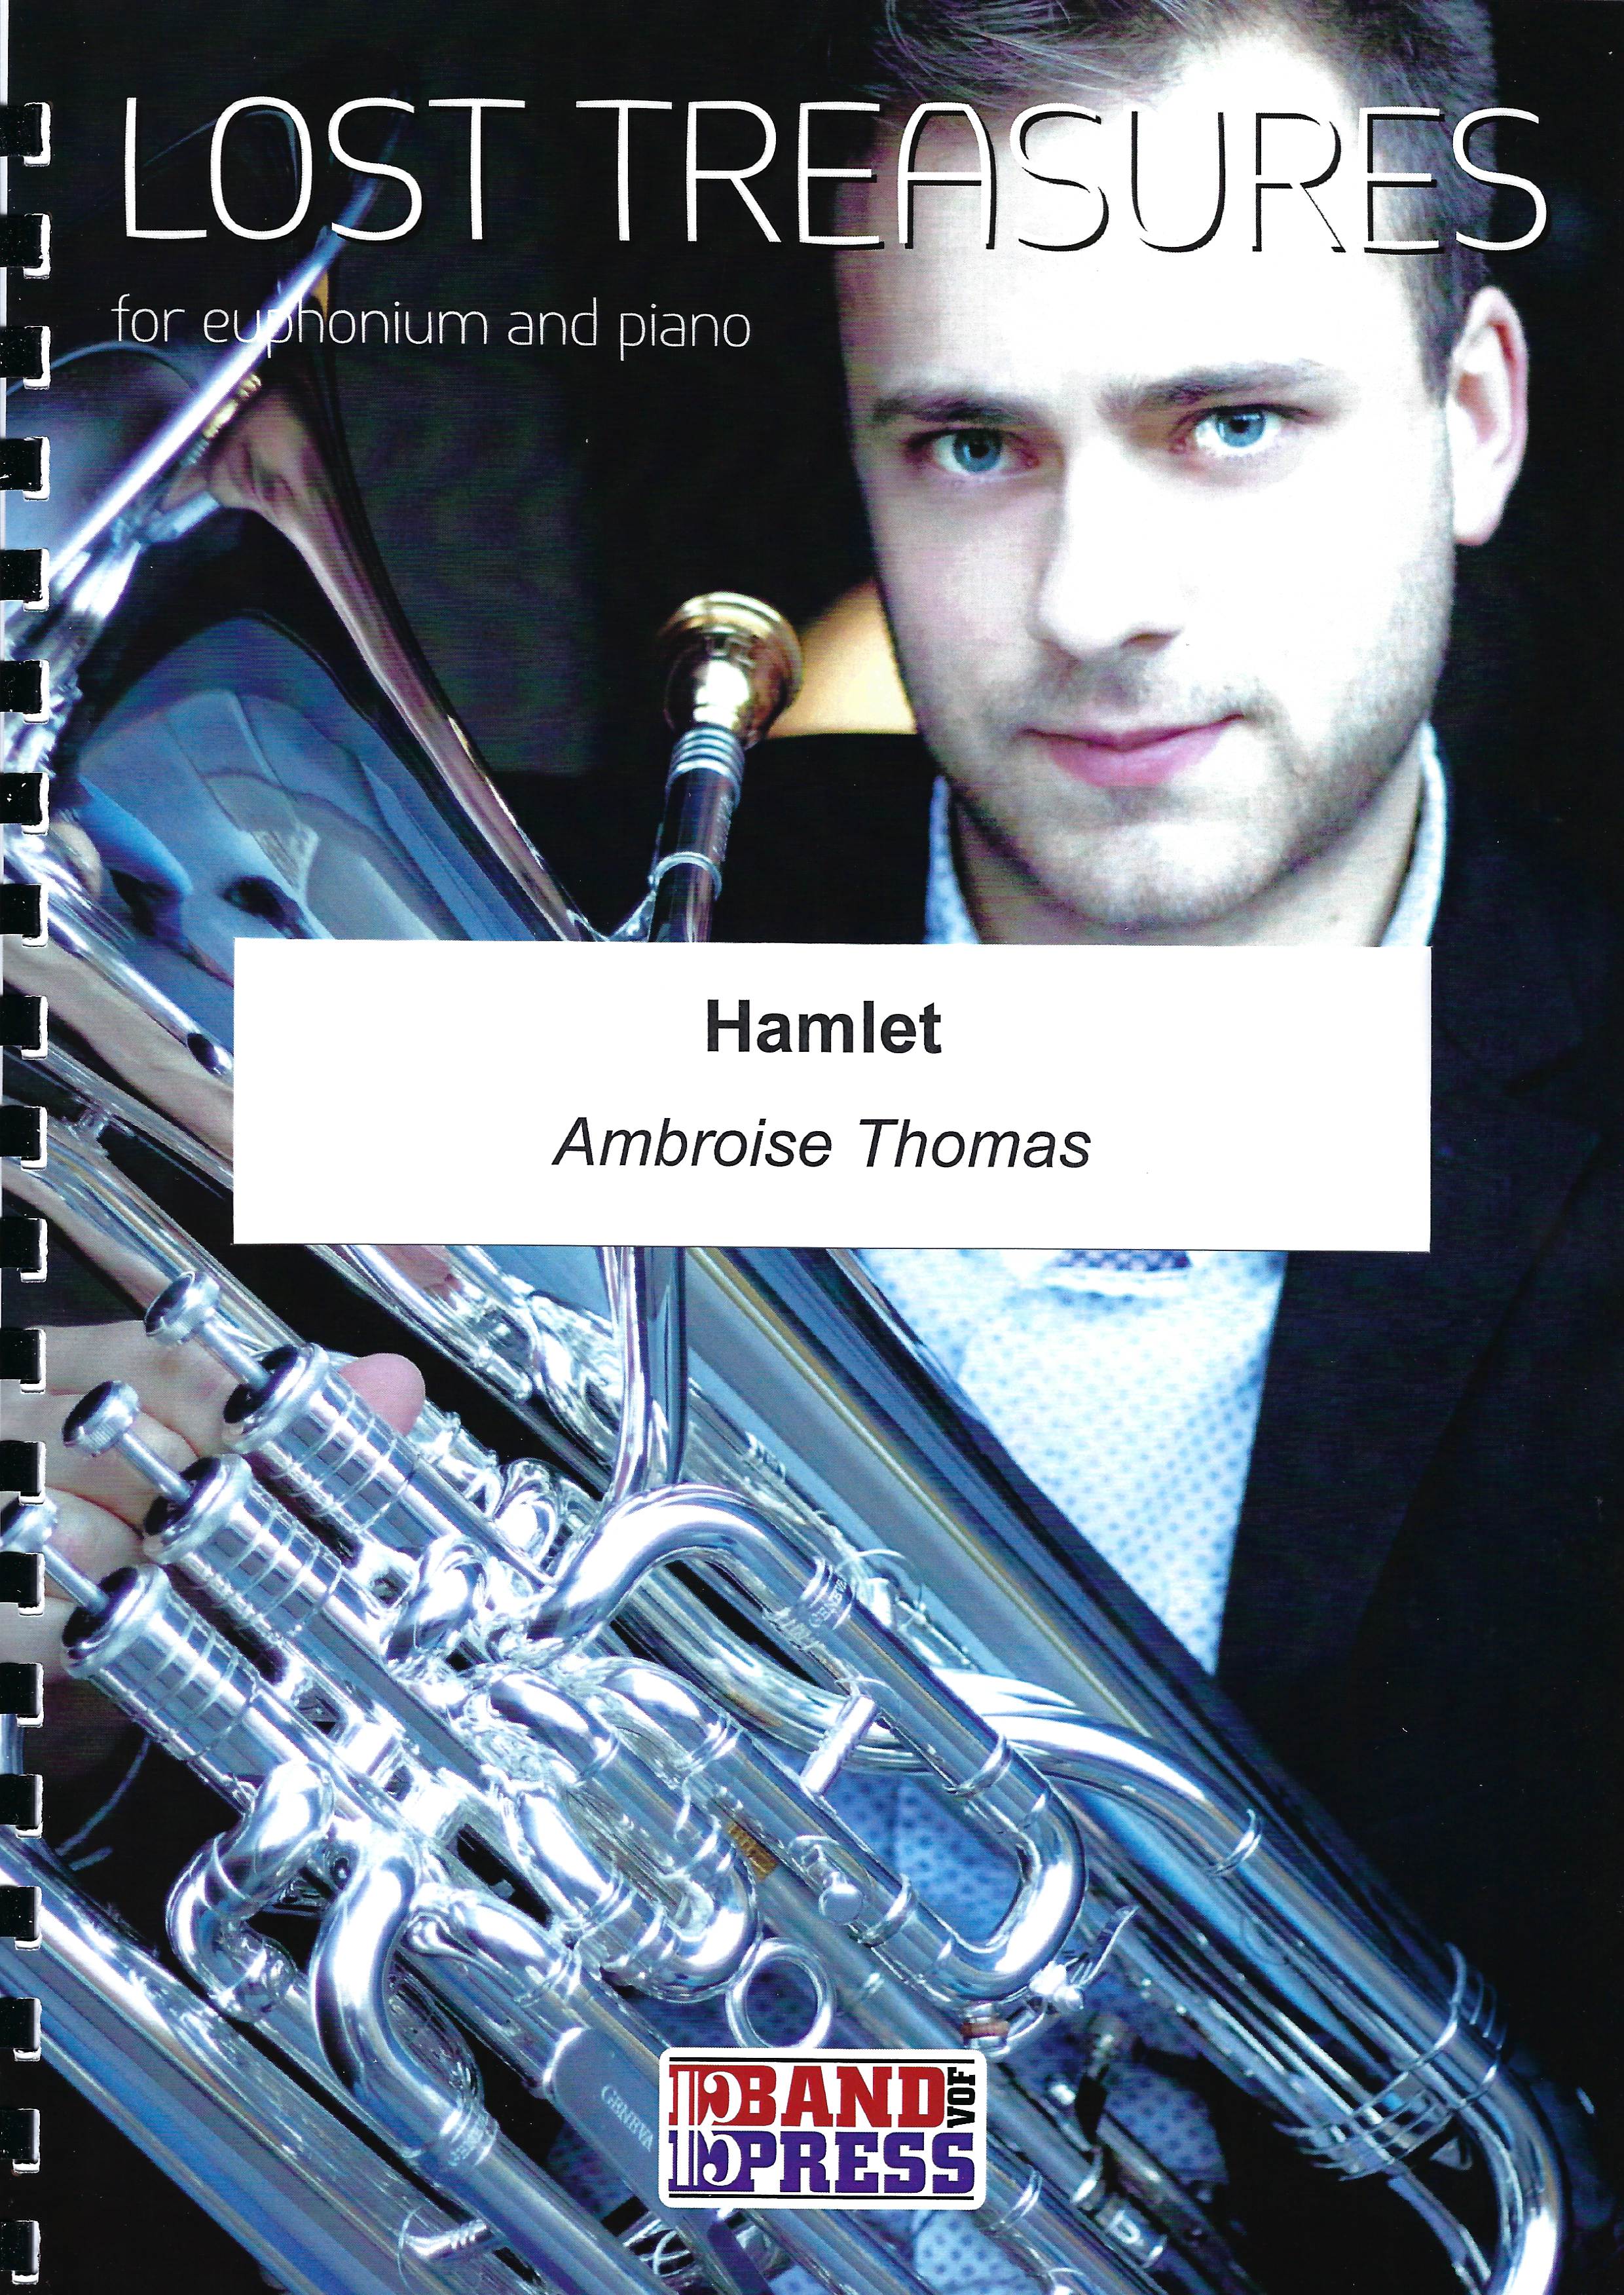 Hamlet - Amboise Thomas - Euph and Piano (Lost Treasures Series)